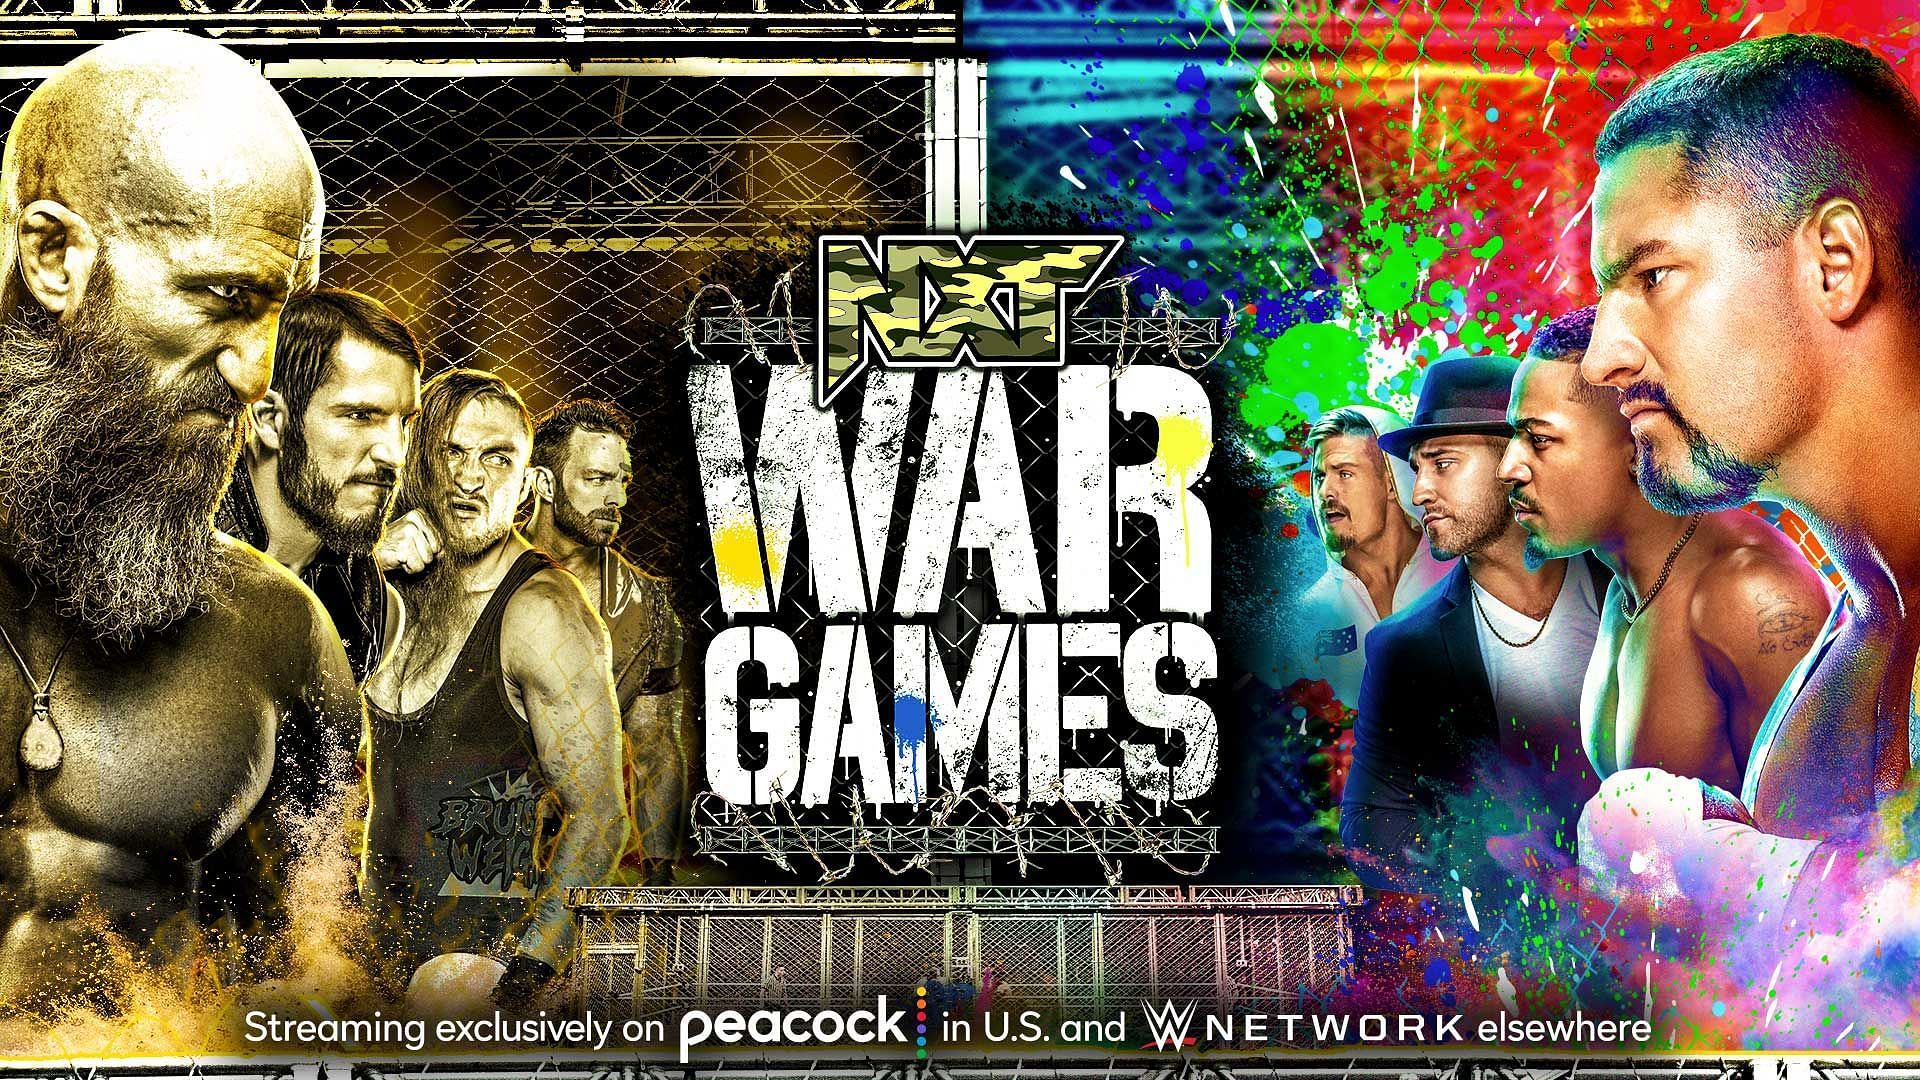 NXT: WARGAMES, Let the games begin!!